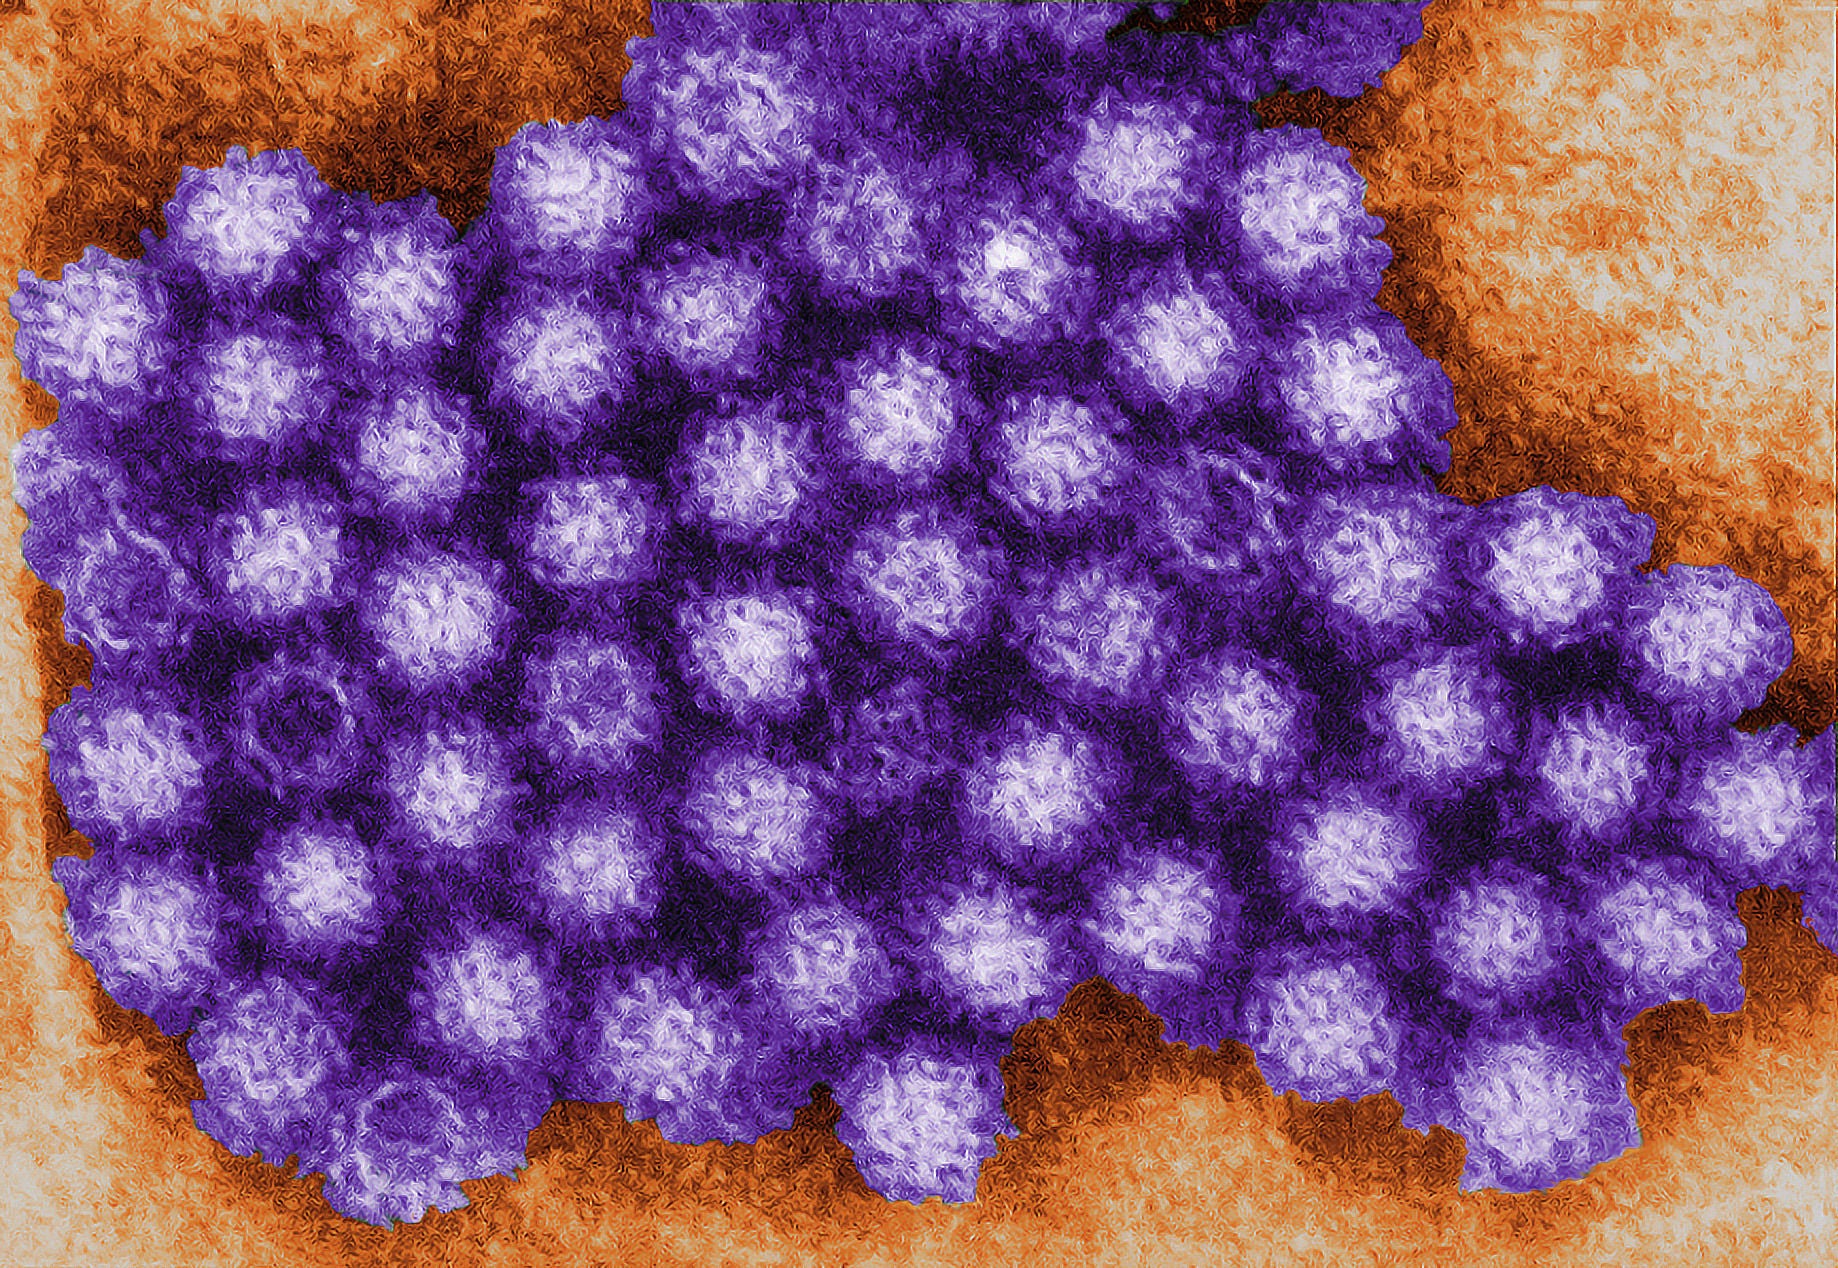 Norovirus seen under a microscope